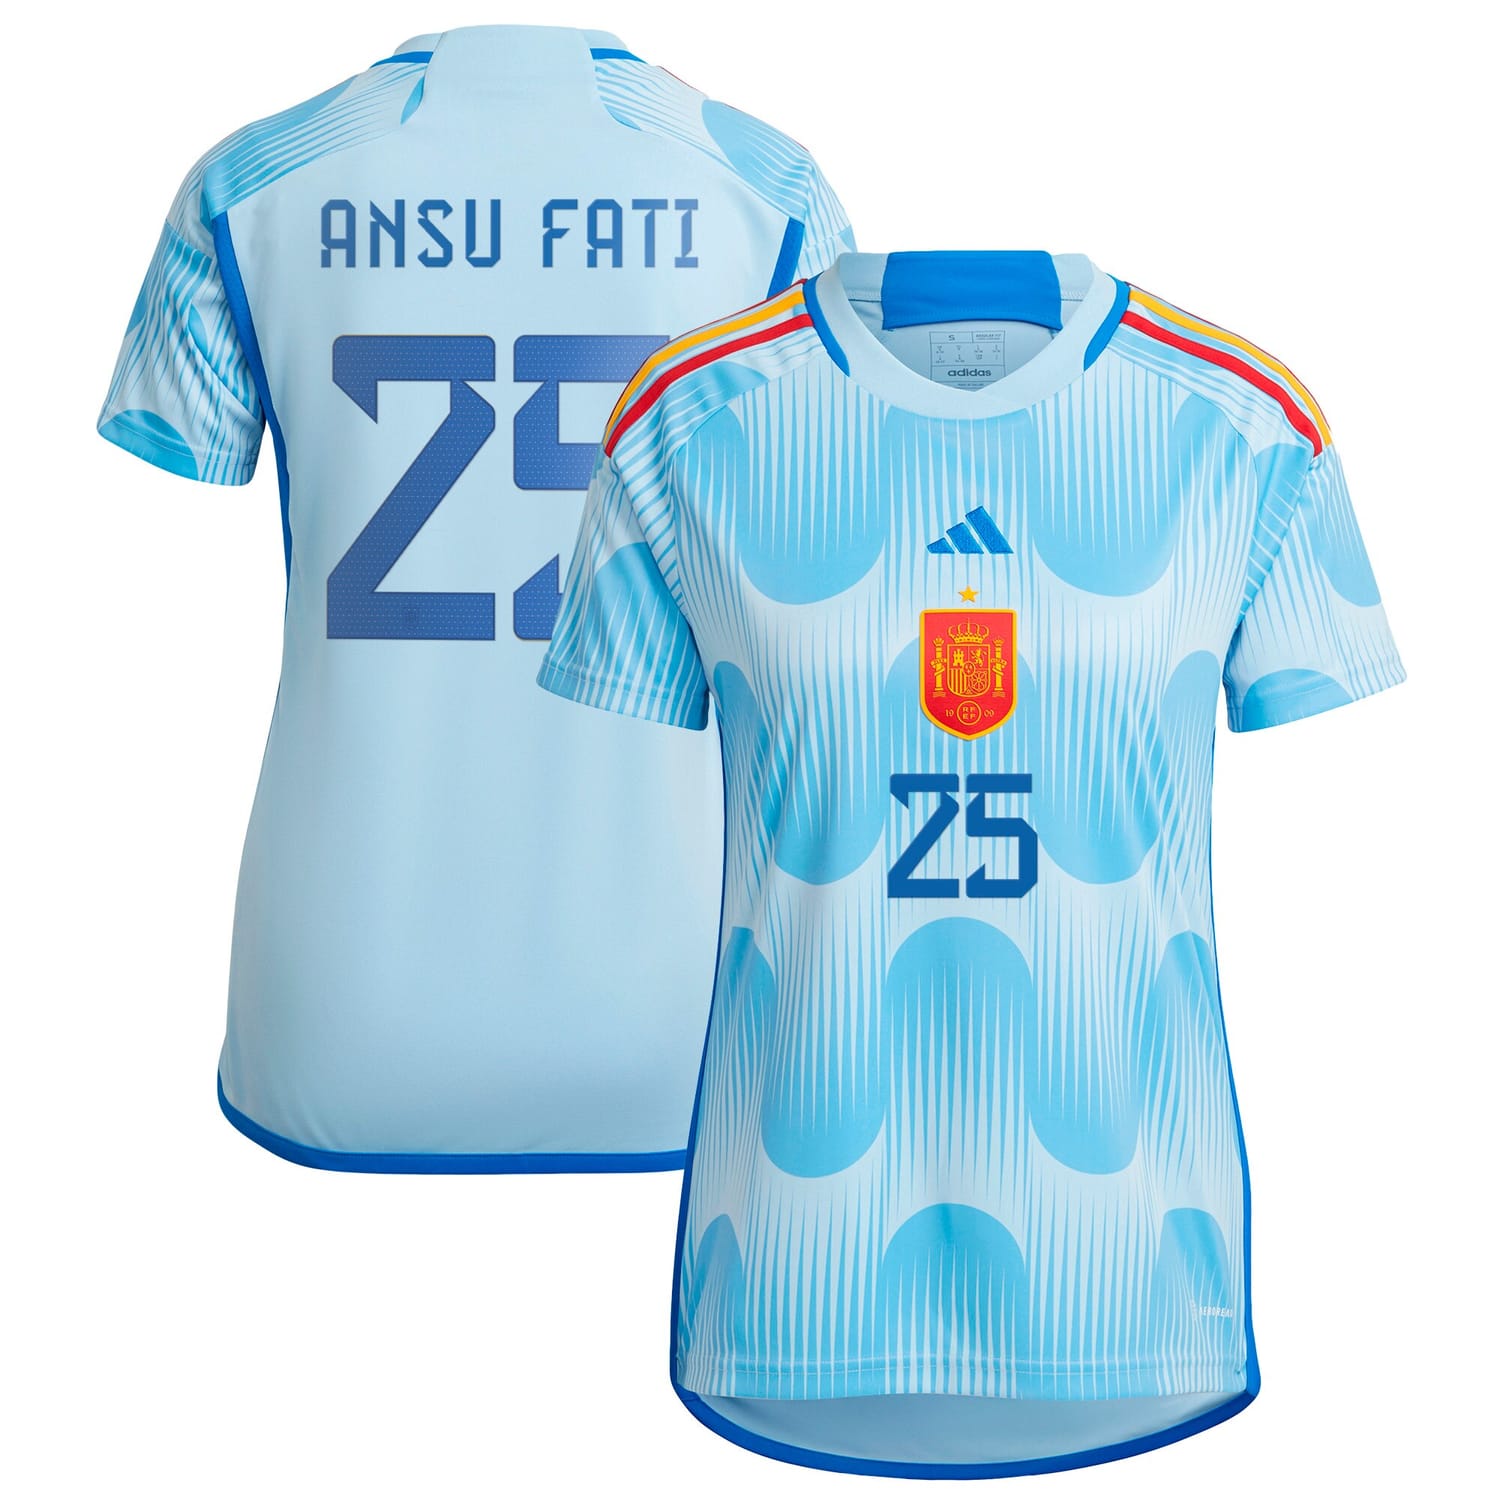 Spain National Team Away Jersey Shirt Blue 2022-23 player Ansu Fati printing for Women